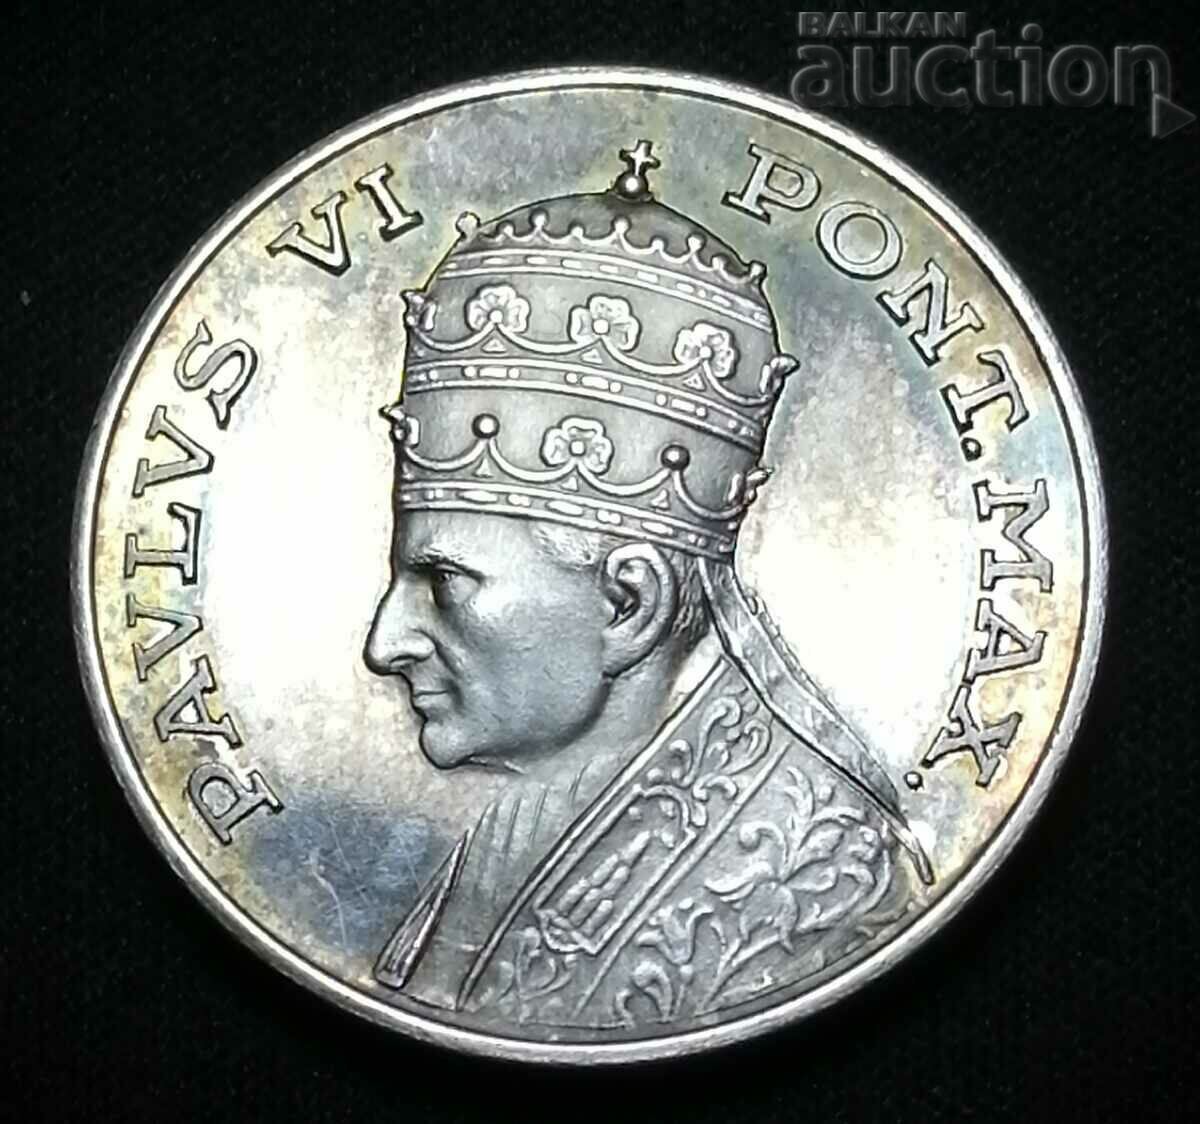 Vatican 1963, Paul al VI-lea - MICHELANGELO - MEDALIA DE ARGINT